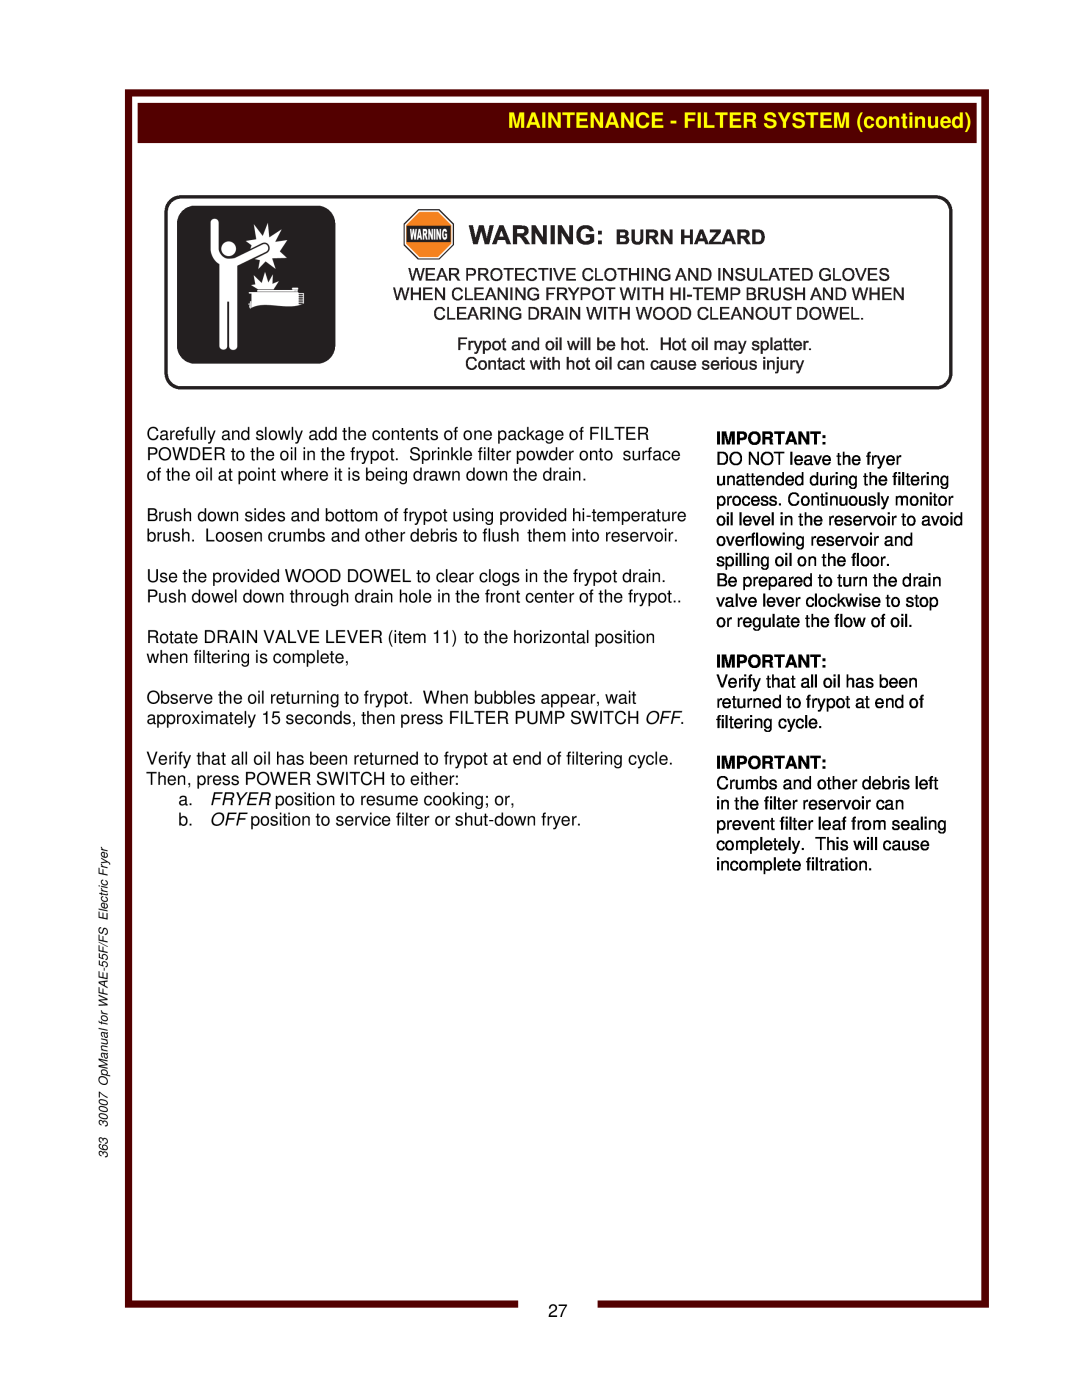 Wells WFAE-55F operation manual Warningwarning Burn Hazard, Frypot and oil will be hot. Hot oil may splatter 